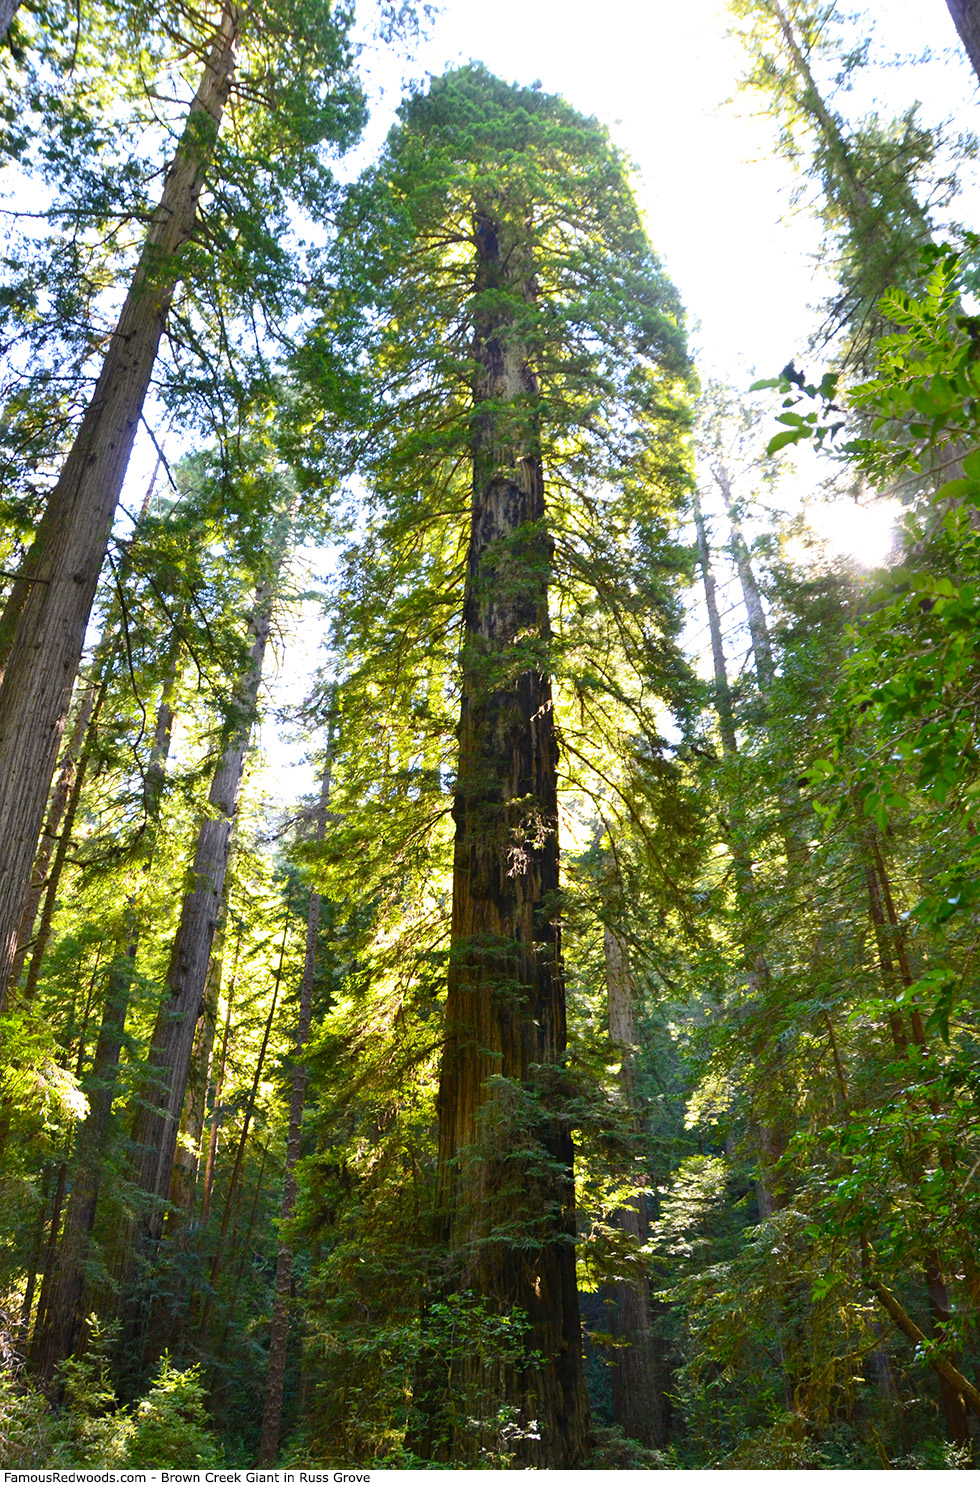 Russ Grove - Brown Creek Giant Tree